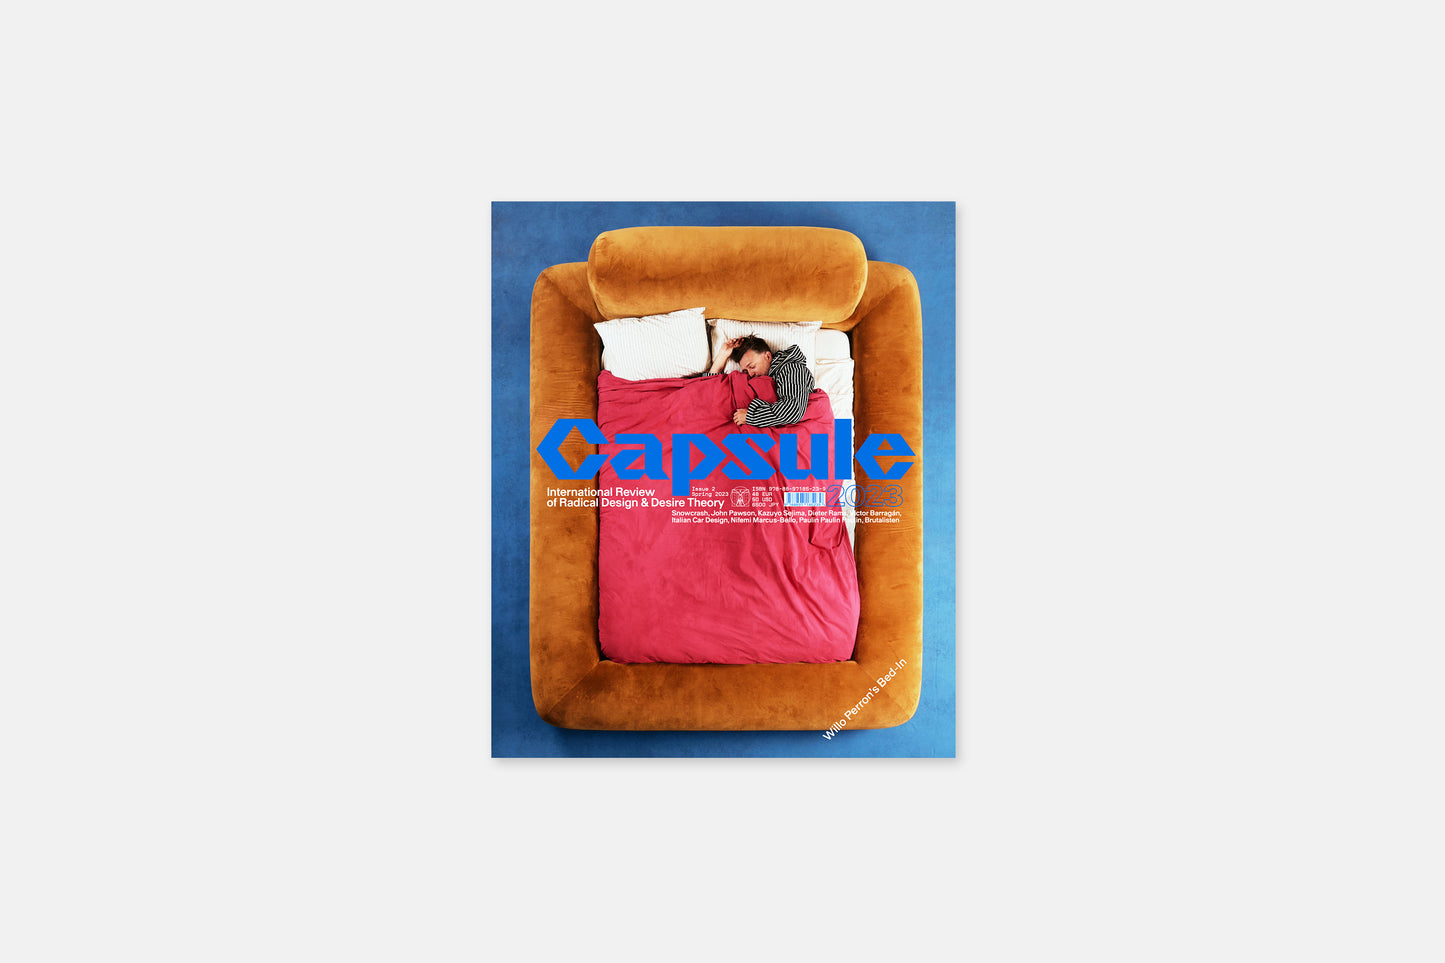 Capsule Issue 2 – Willo Perron's Bed-in